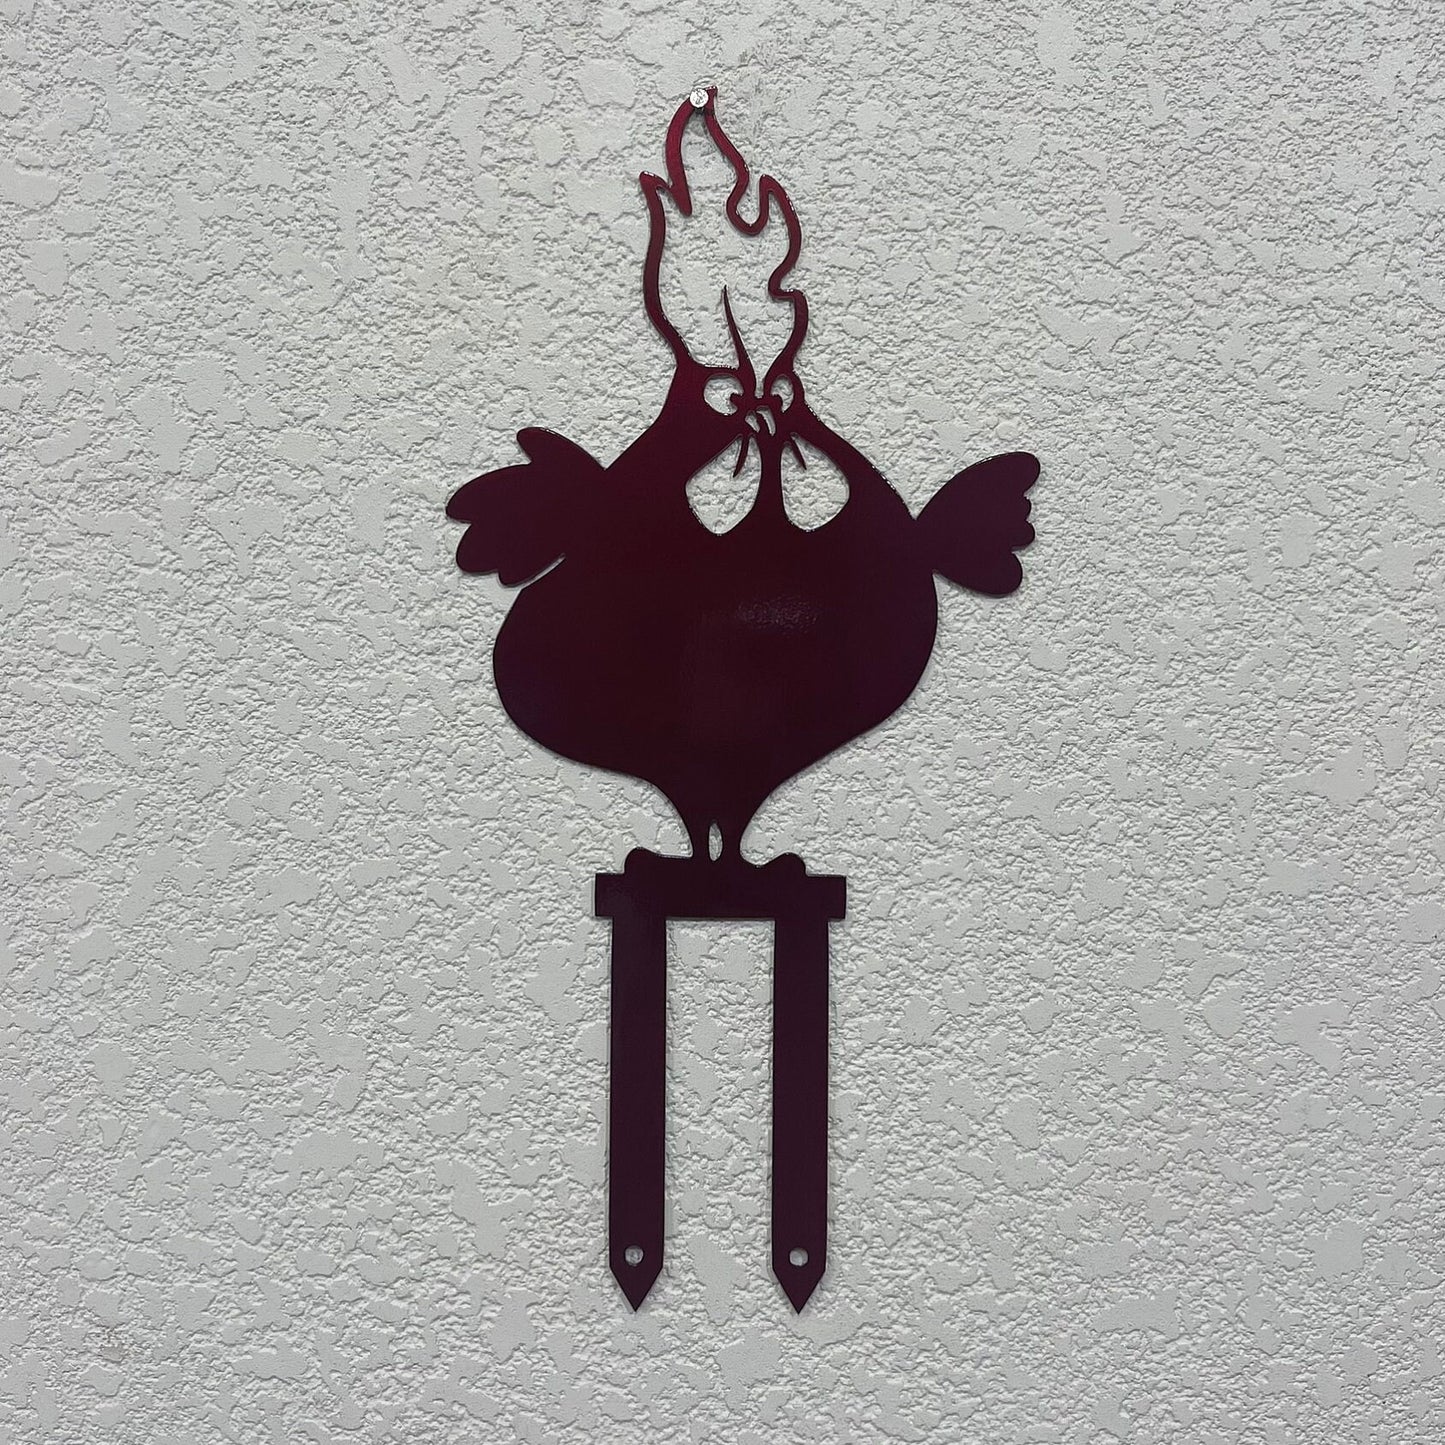 Chicken Yard Art Stakes